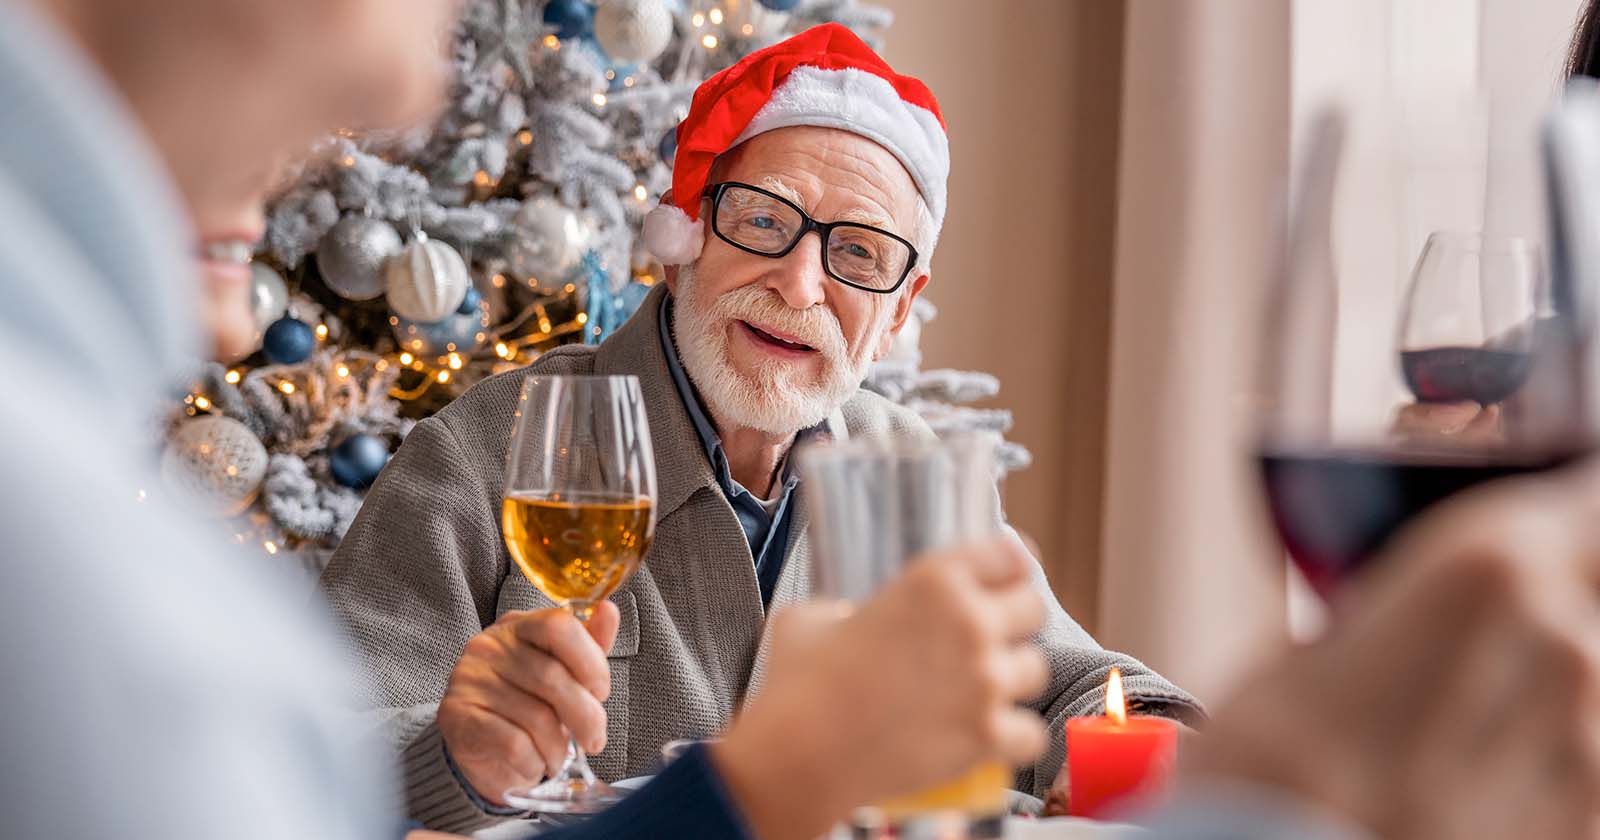 Elderly man wearing santa hat holding glass of champagne